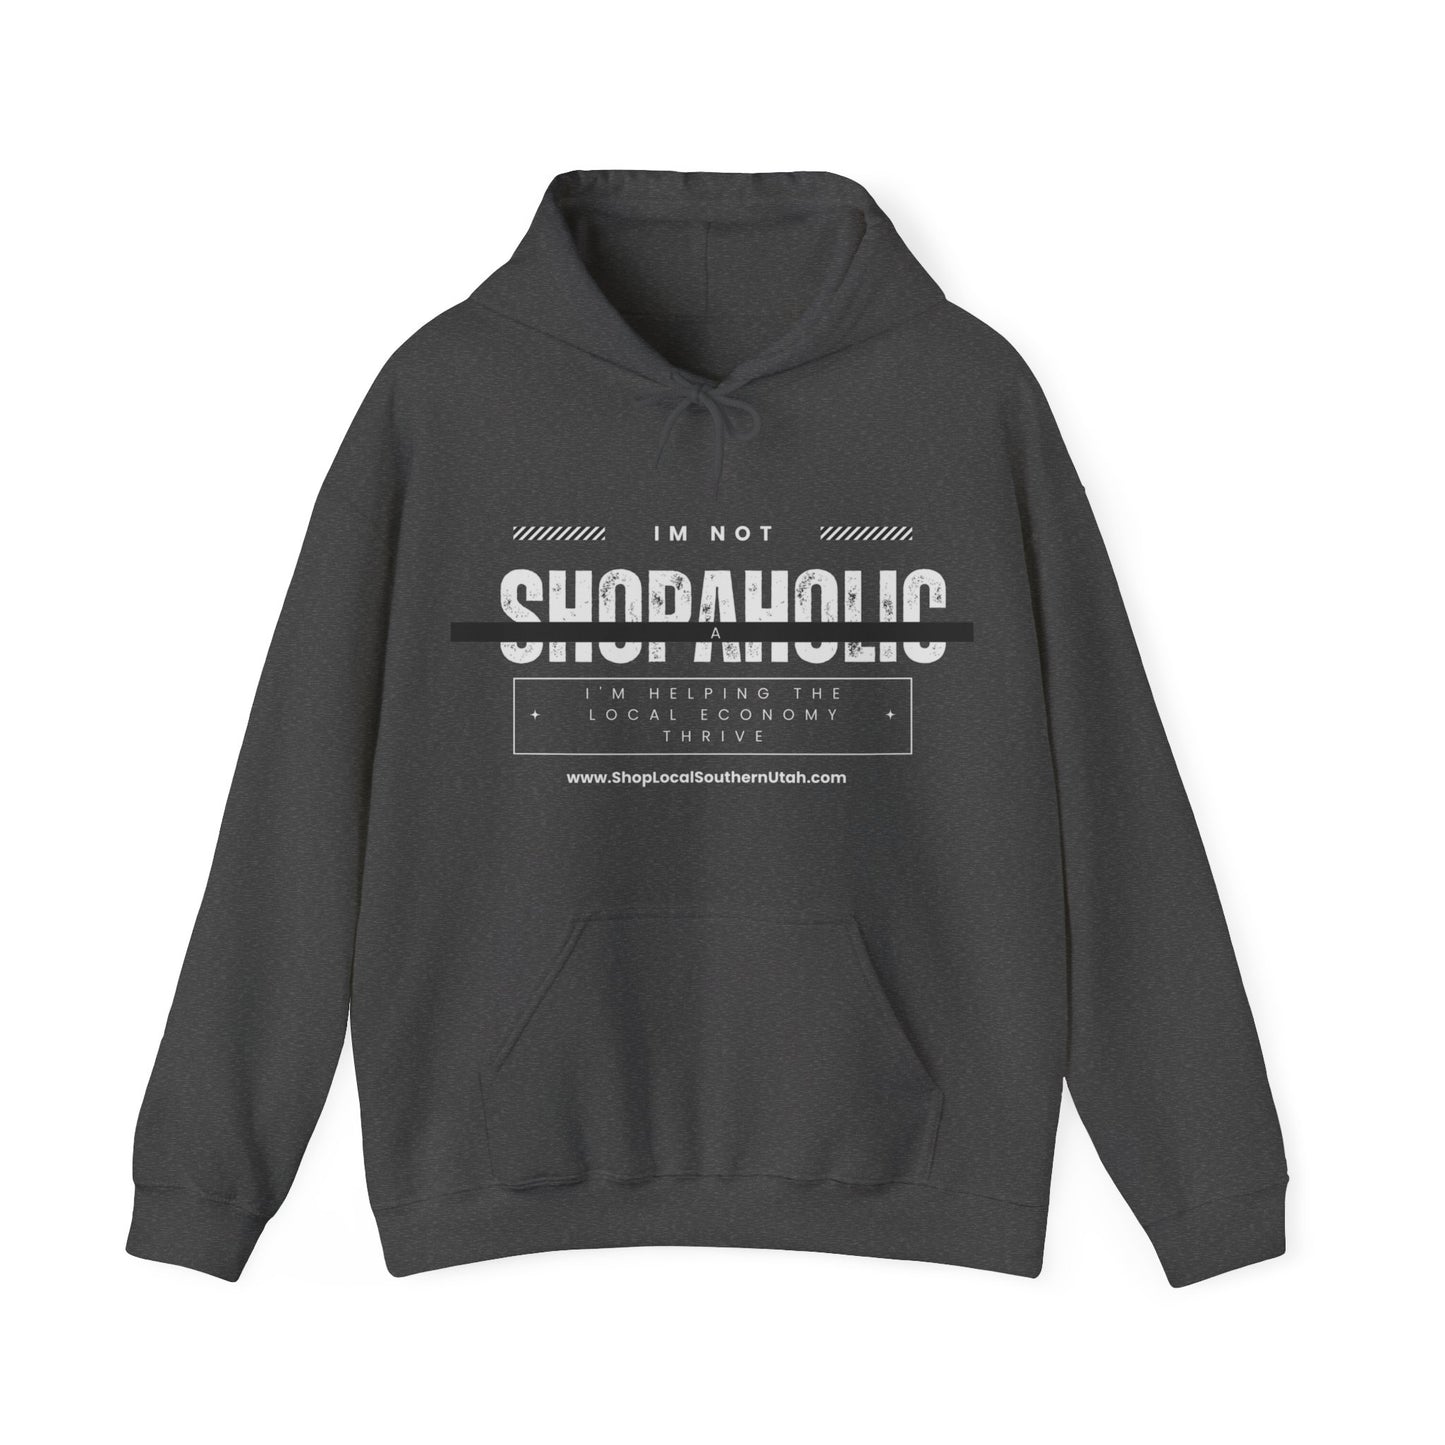 "I'm Not a Shopaholic" Hoodie - Unisex Heavy Blend | Shop Local Southern Utah